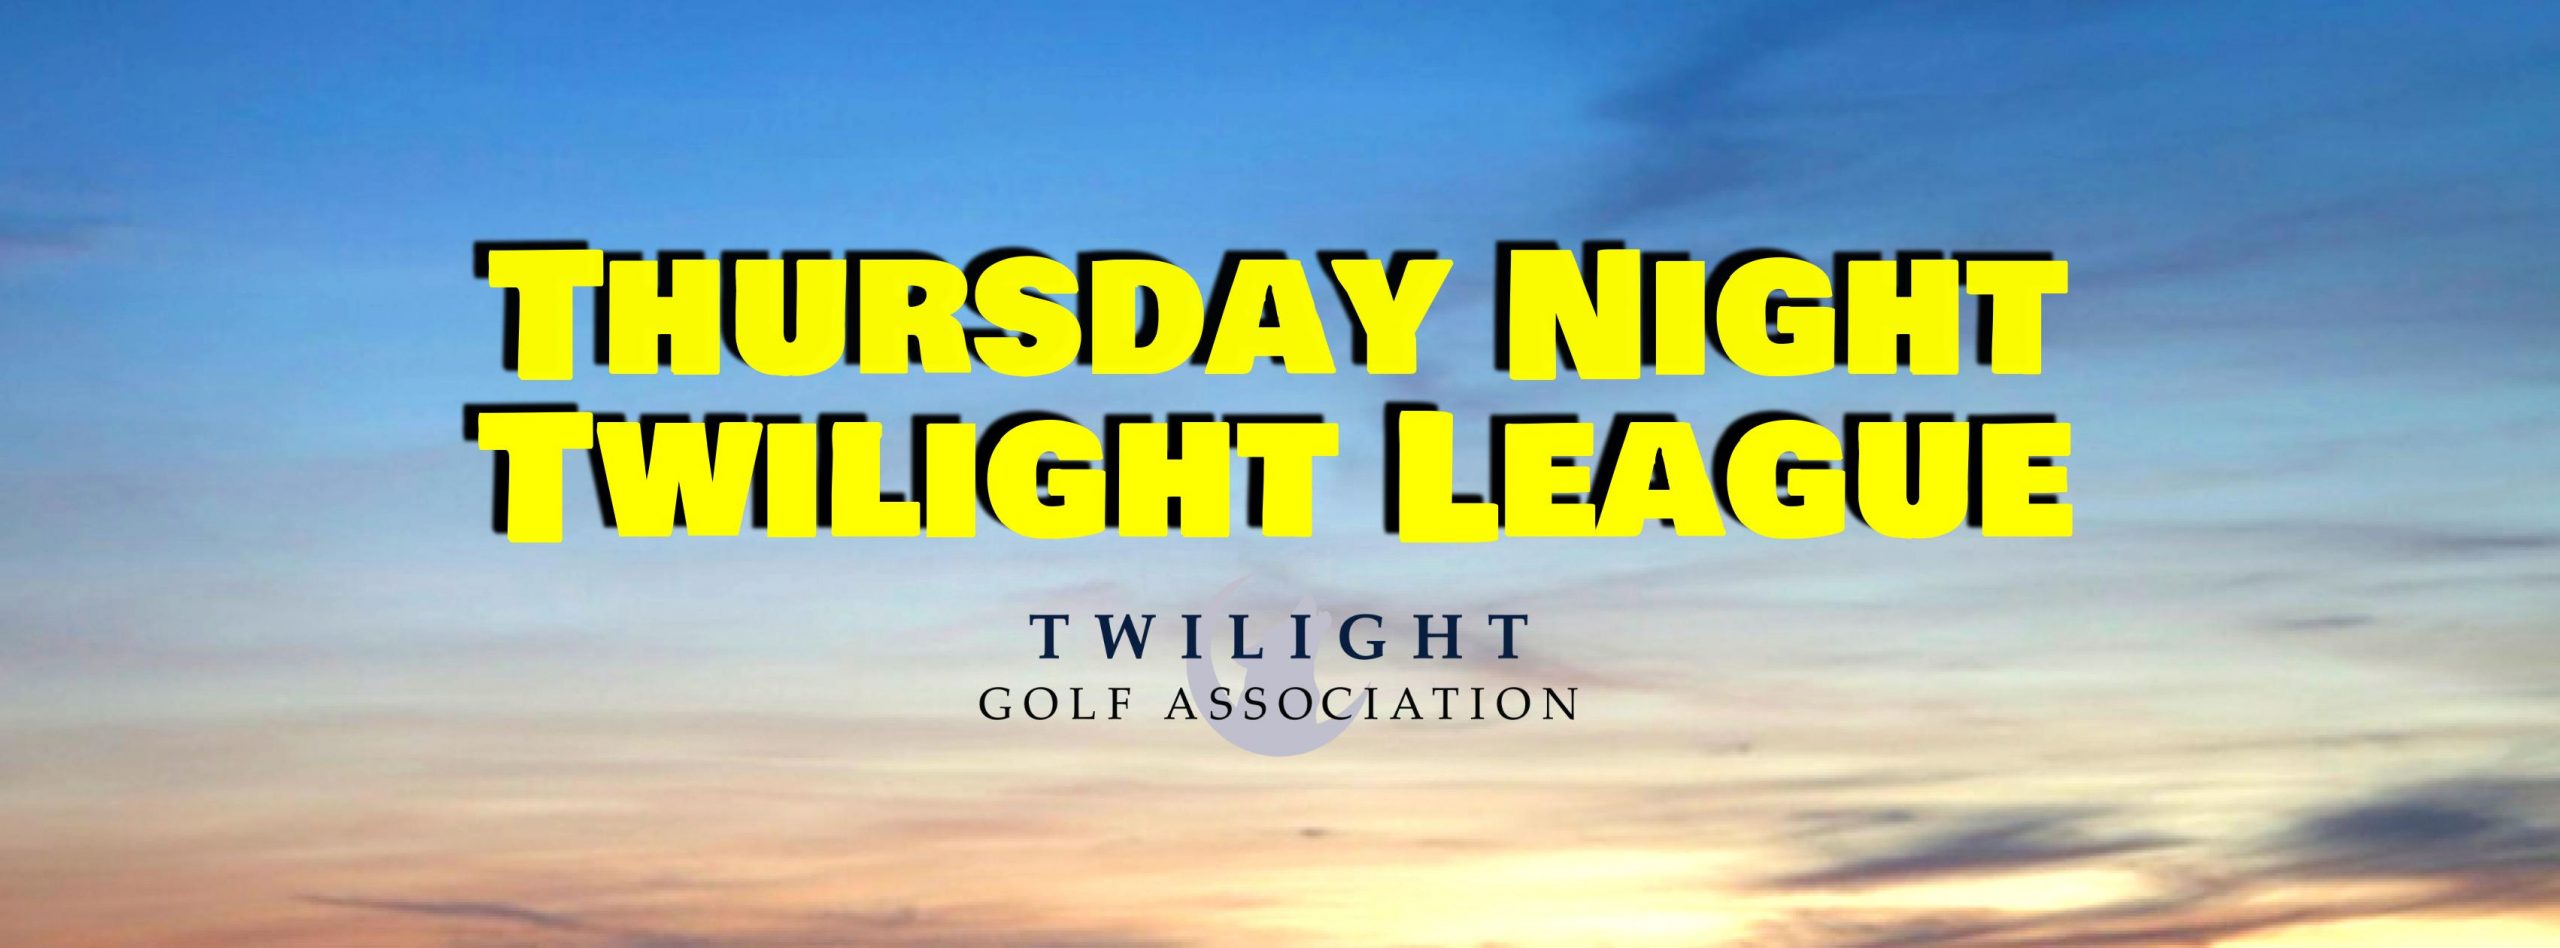 Thursday Night Twilight League at Stonebridge Golf Club